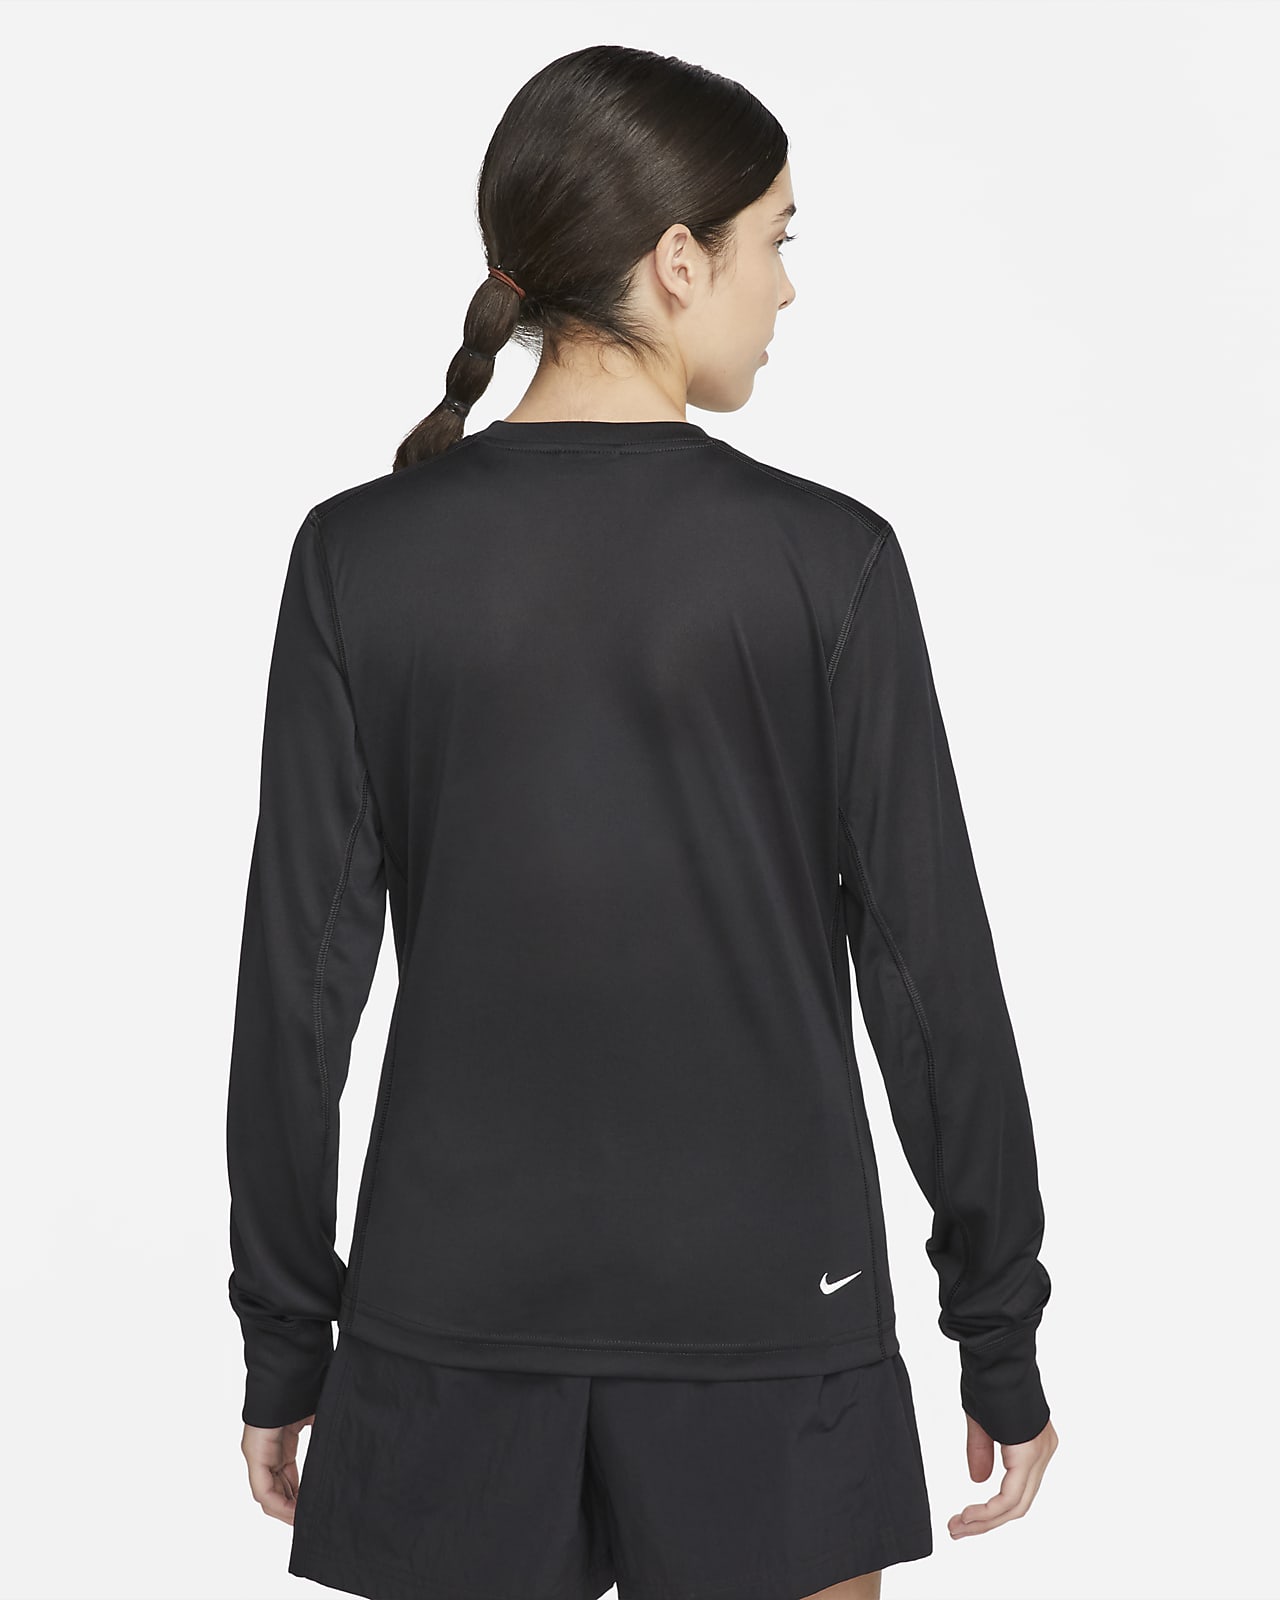 Nike ACG Dri-FIT ADV 'Goat Rocks' Women's Long-Sleeve Top. Nike LU